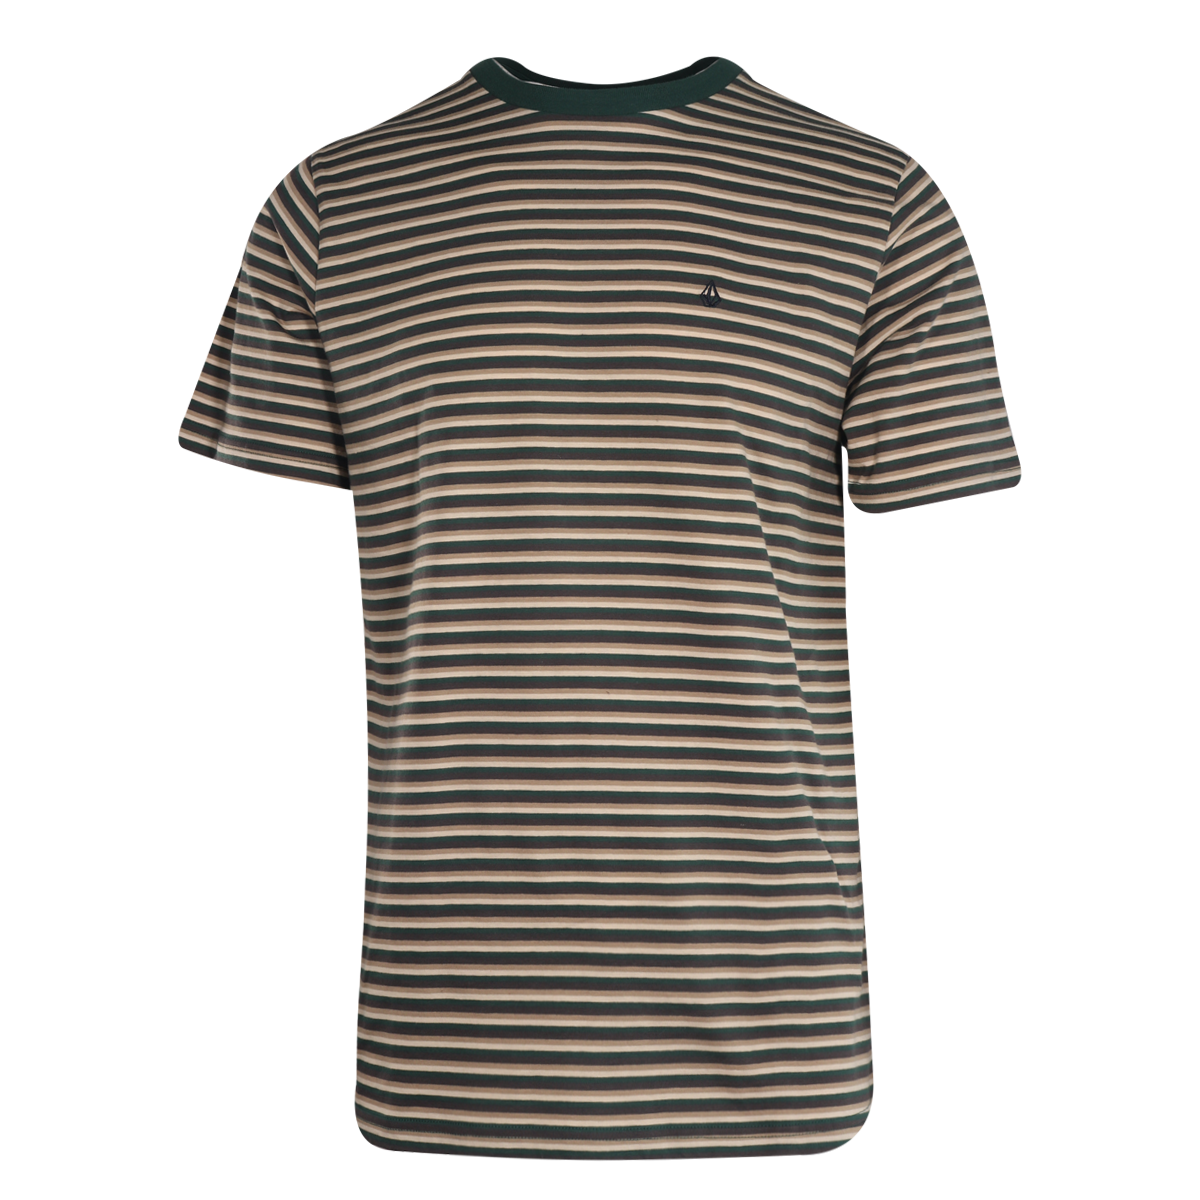 Volcom Men's T-Shirt Trekking Green Striped S/S Tee (S36)